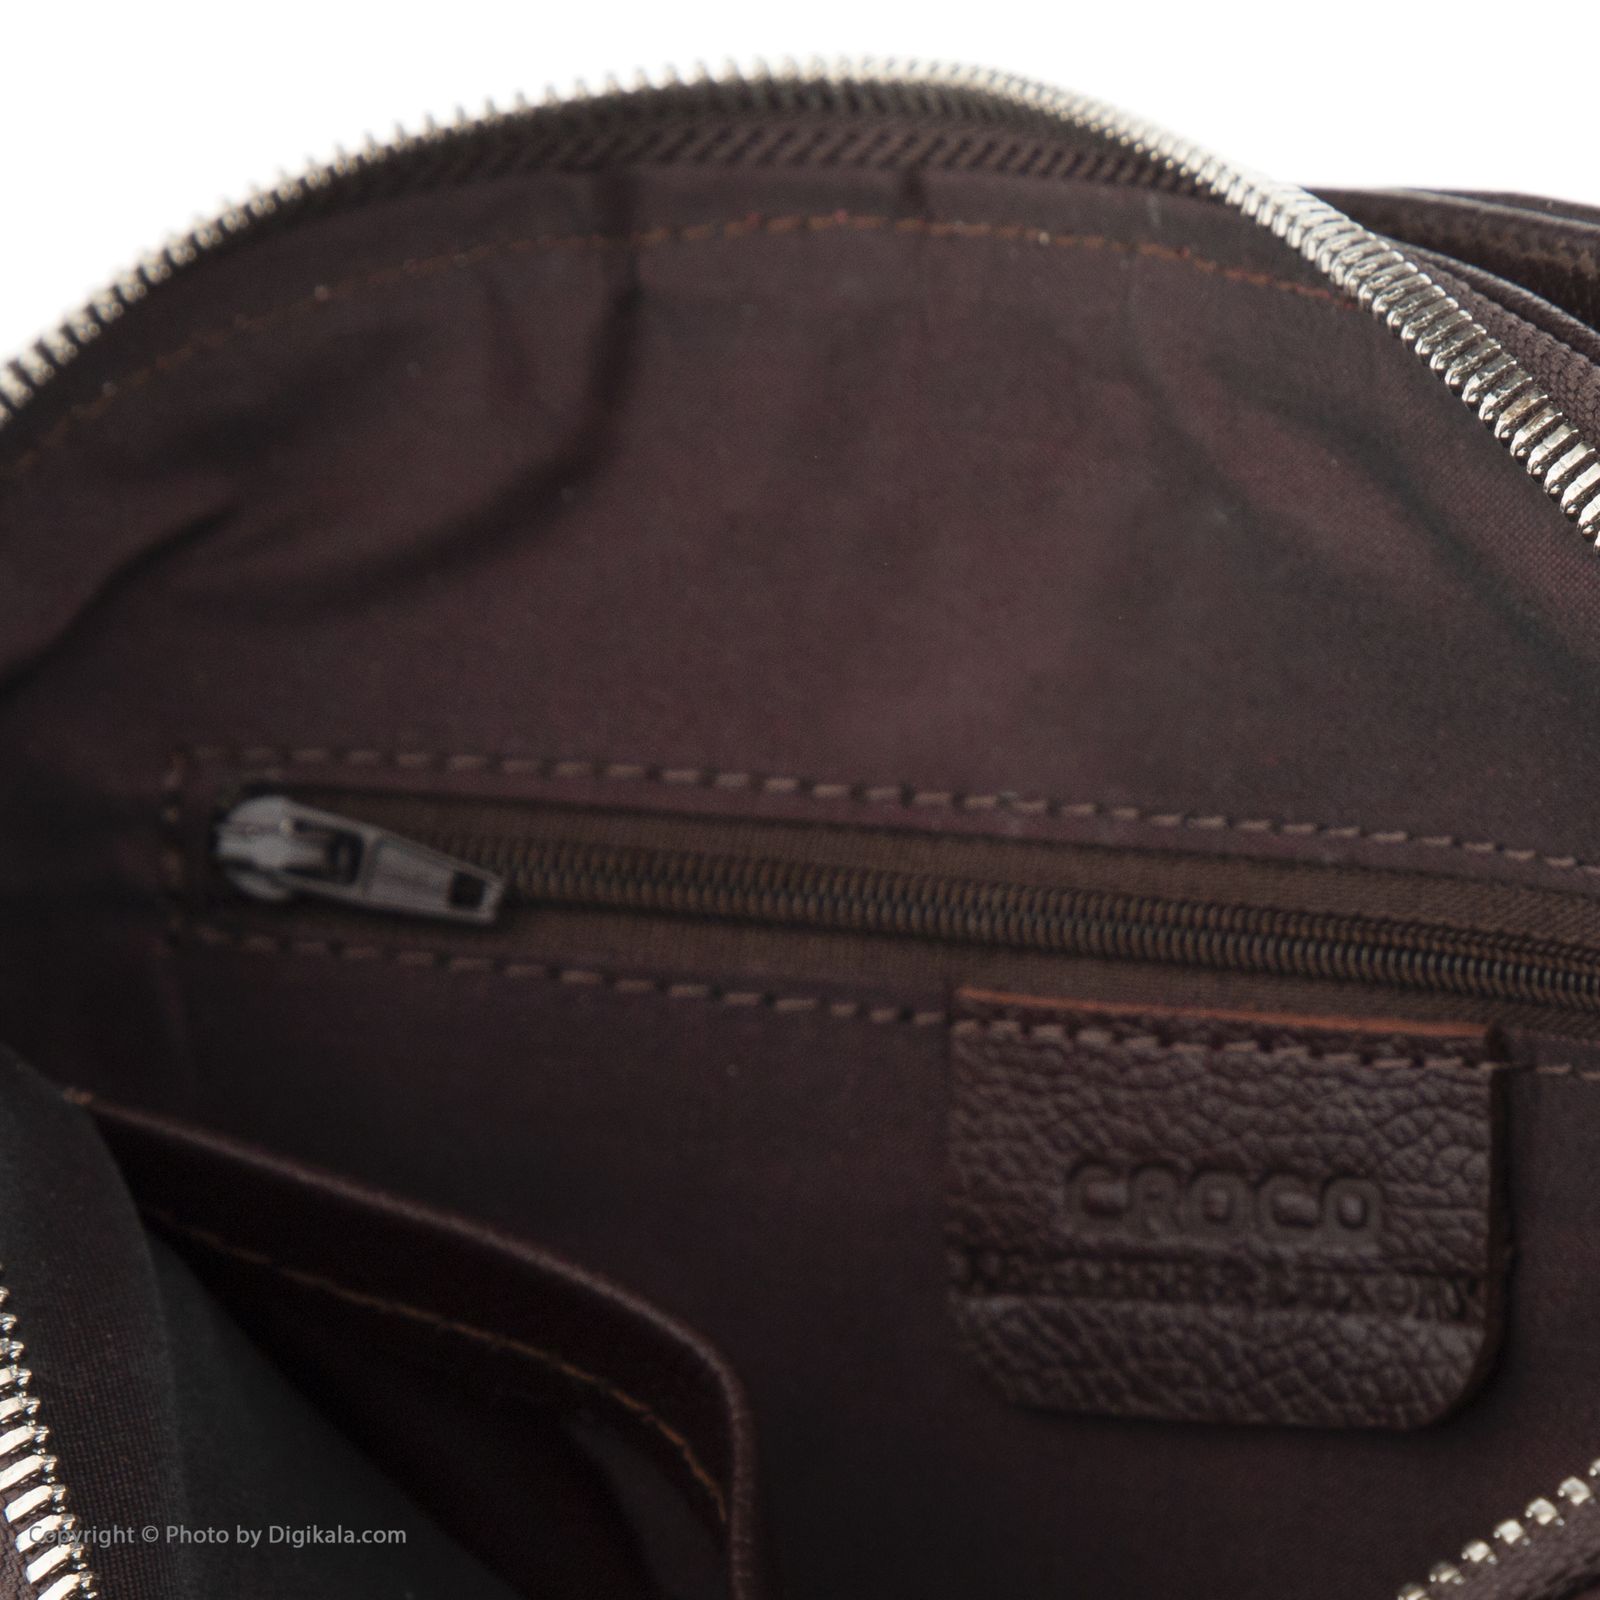 کیف دستی چرم کروکو مدل 400007024 -  - 6